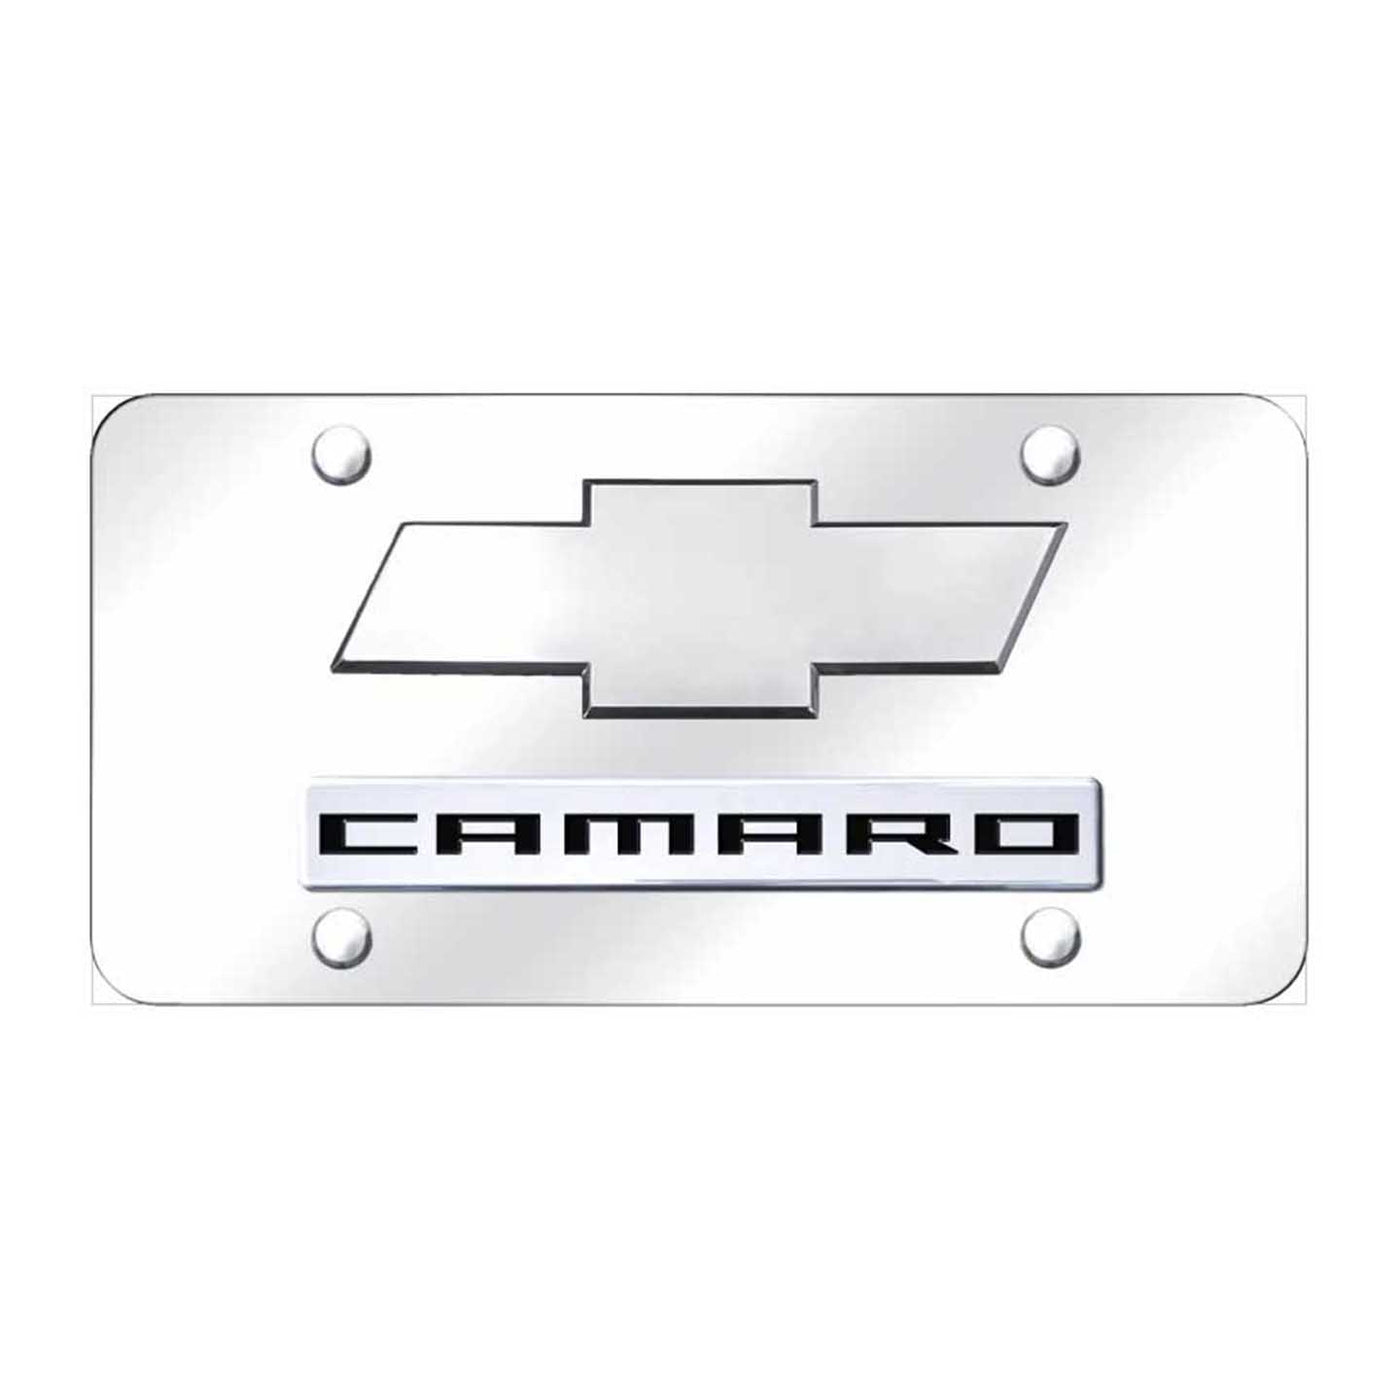 Dual Camaro (New) License Plate - Chrome on Mirrored